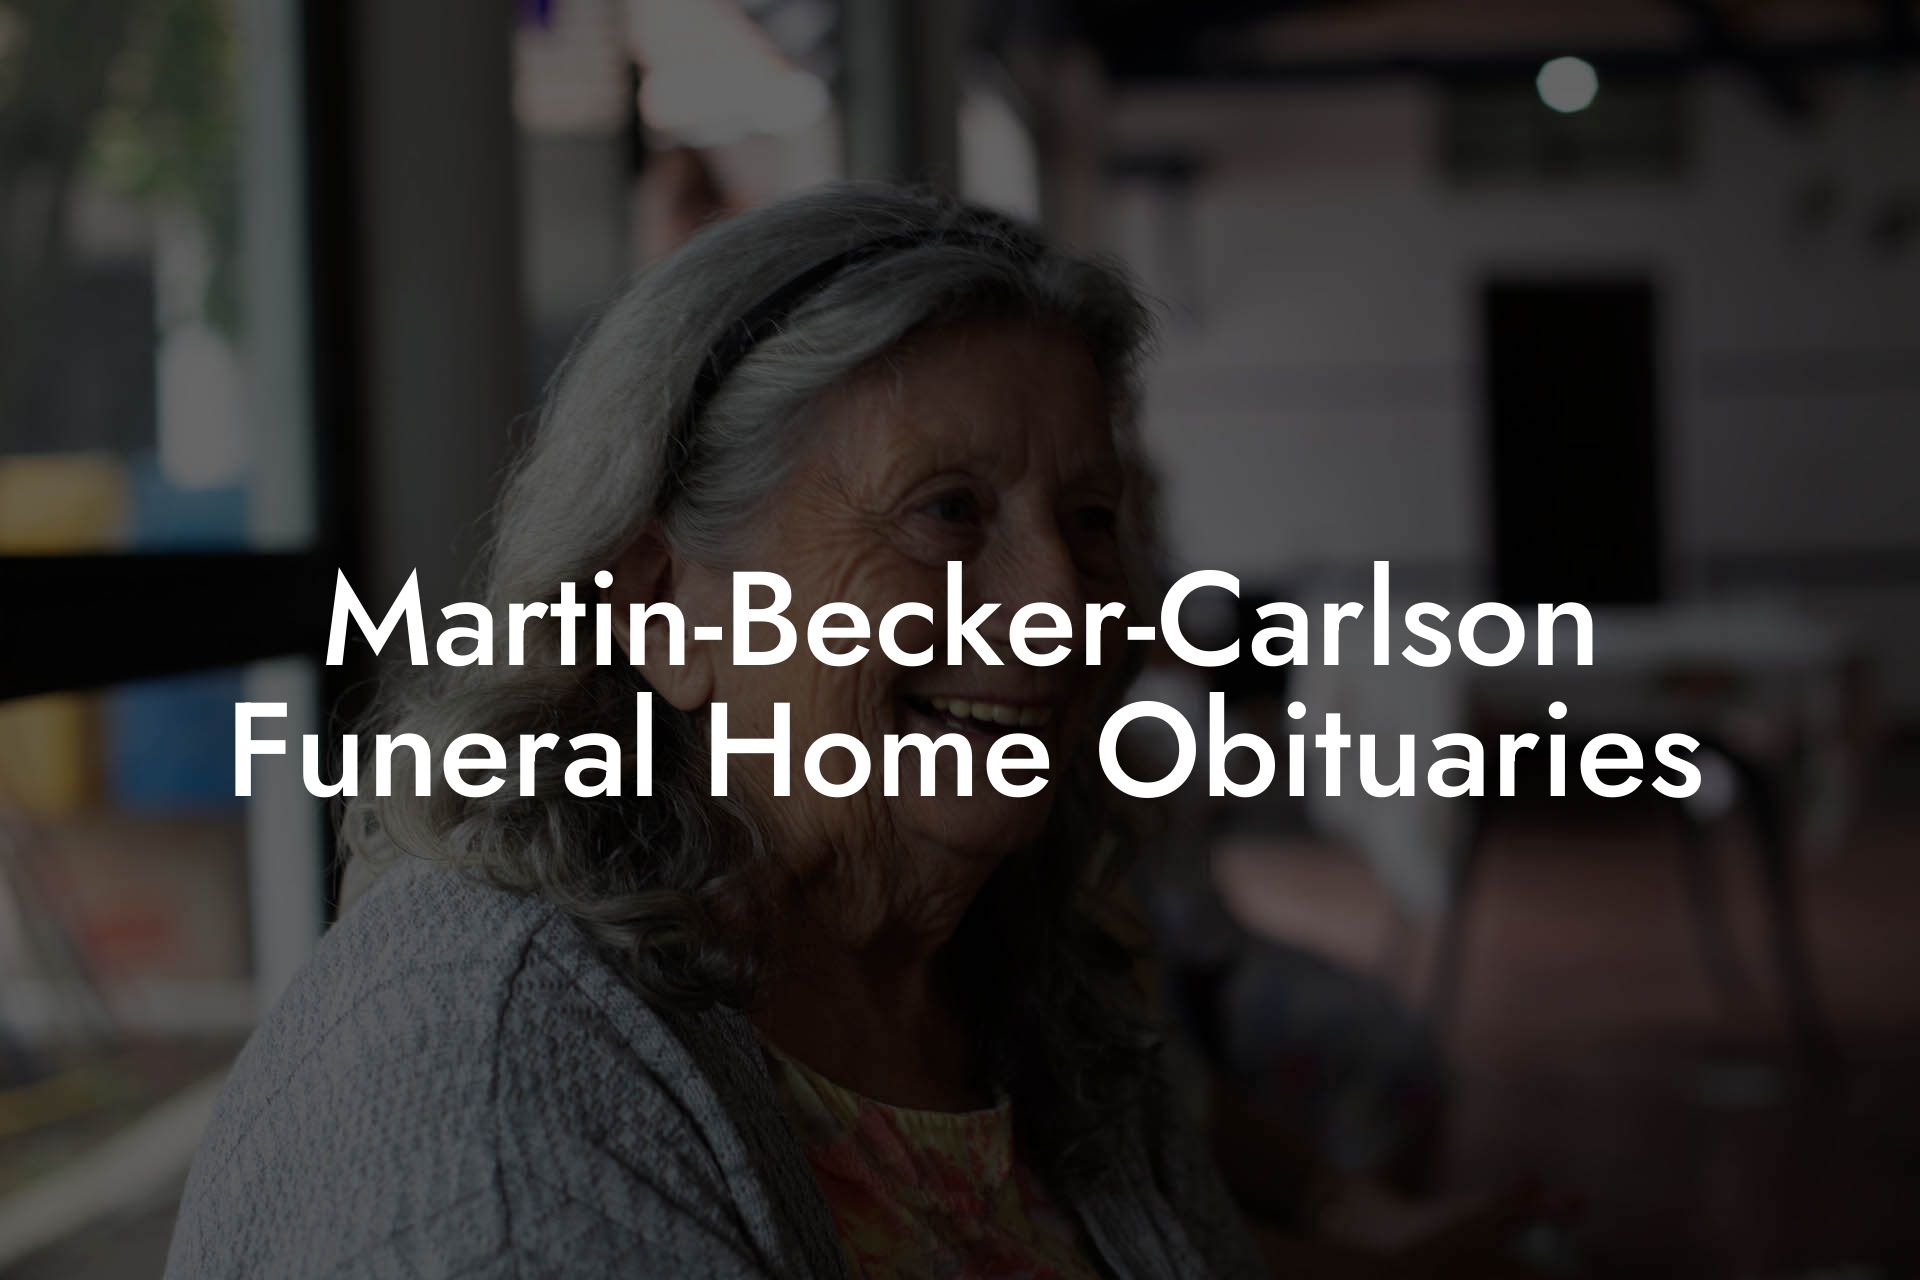 Martin-Becker-Carlson Funeral Home Obituaries